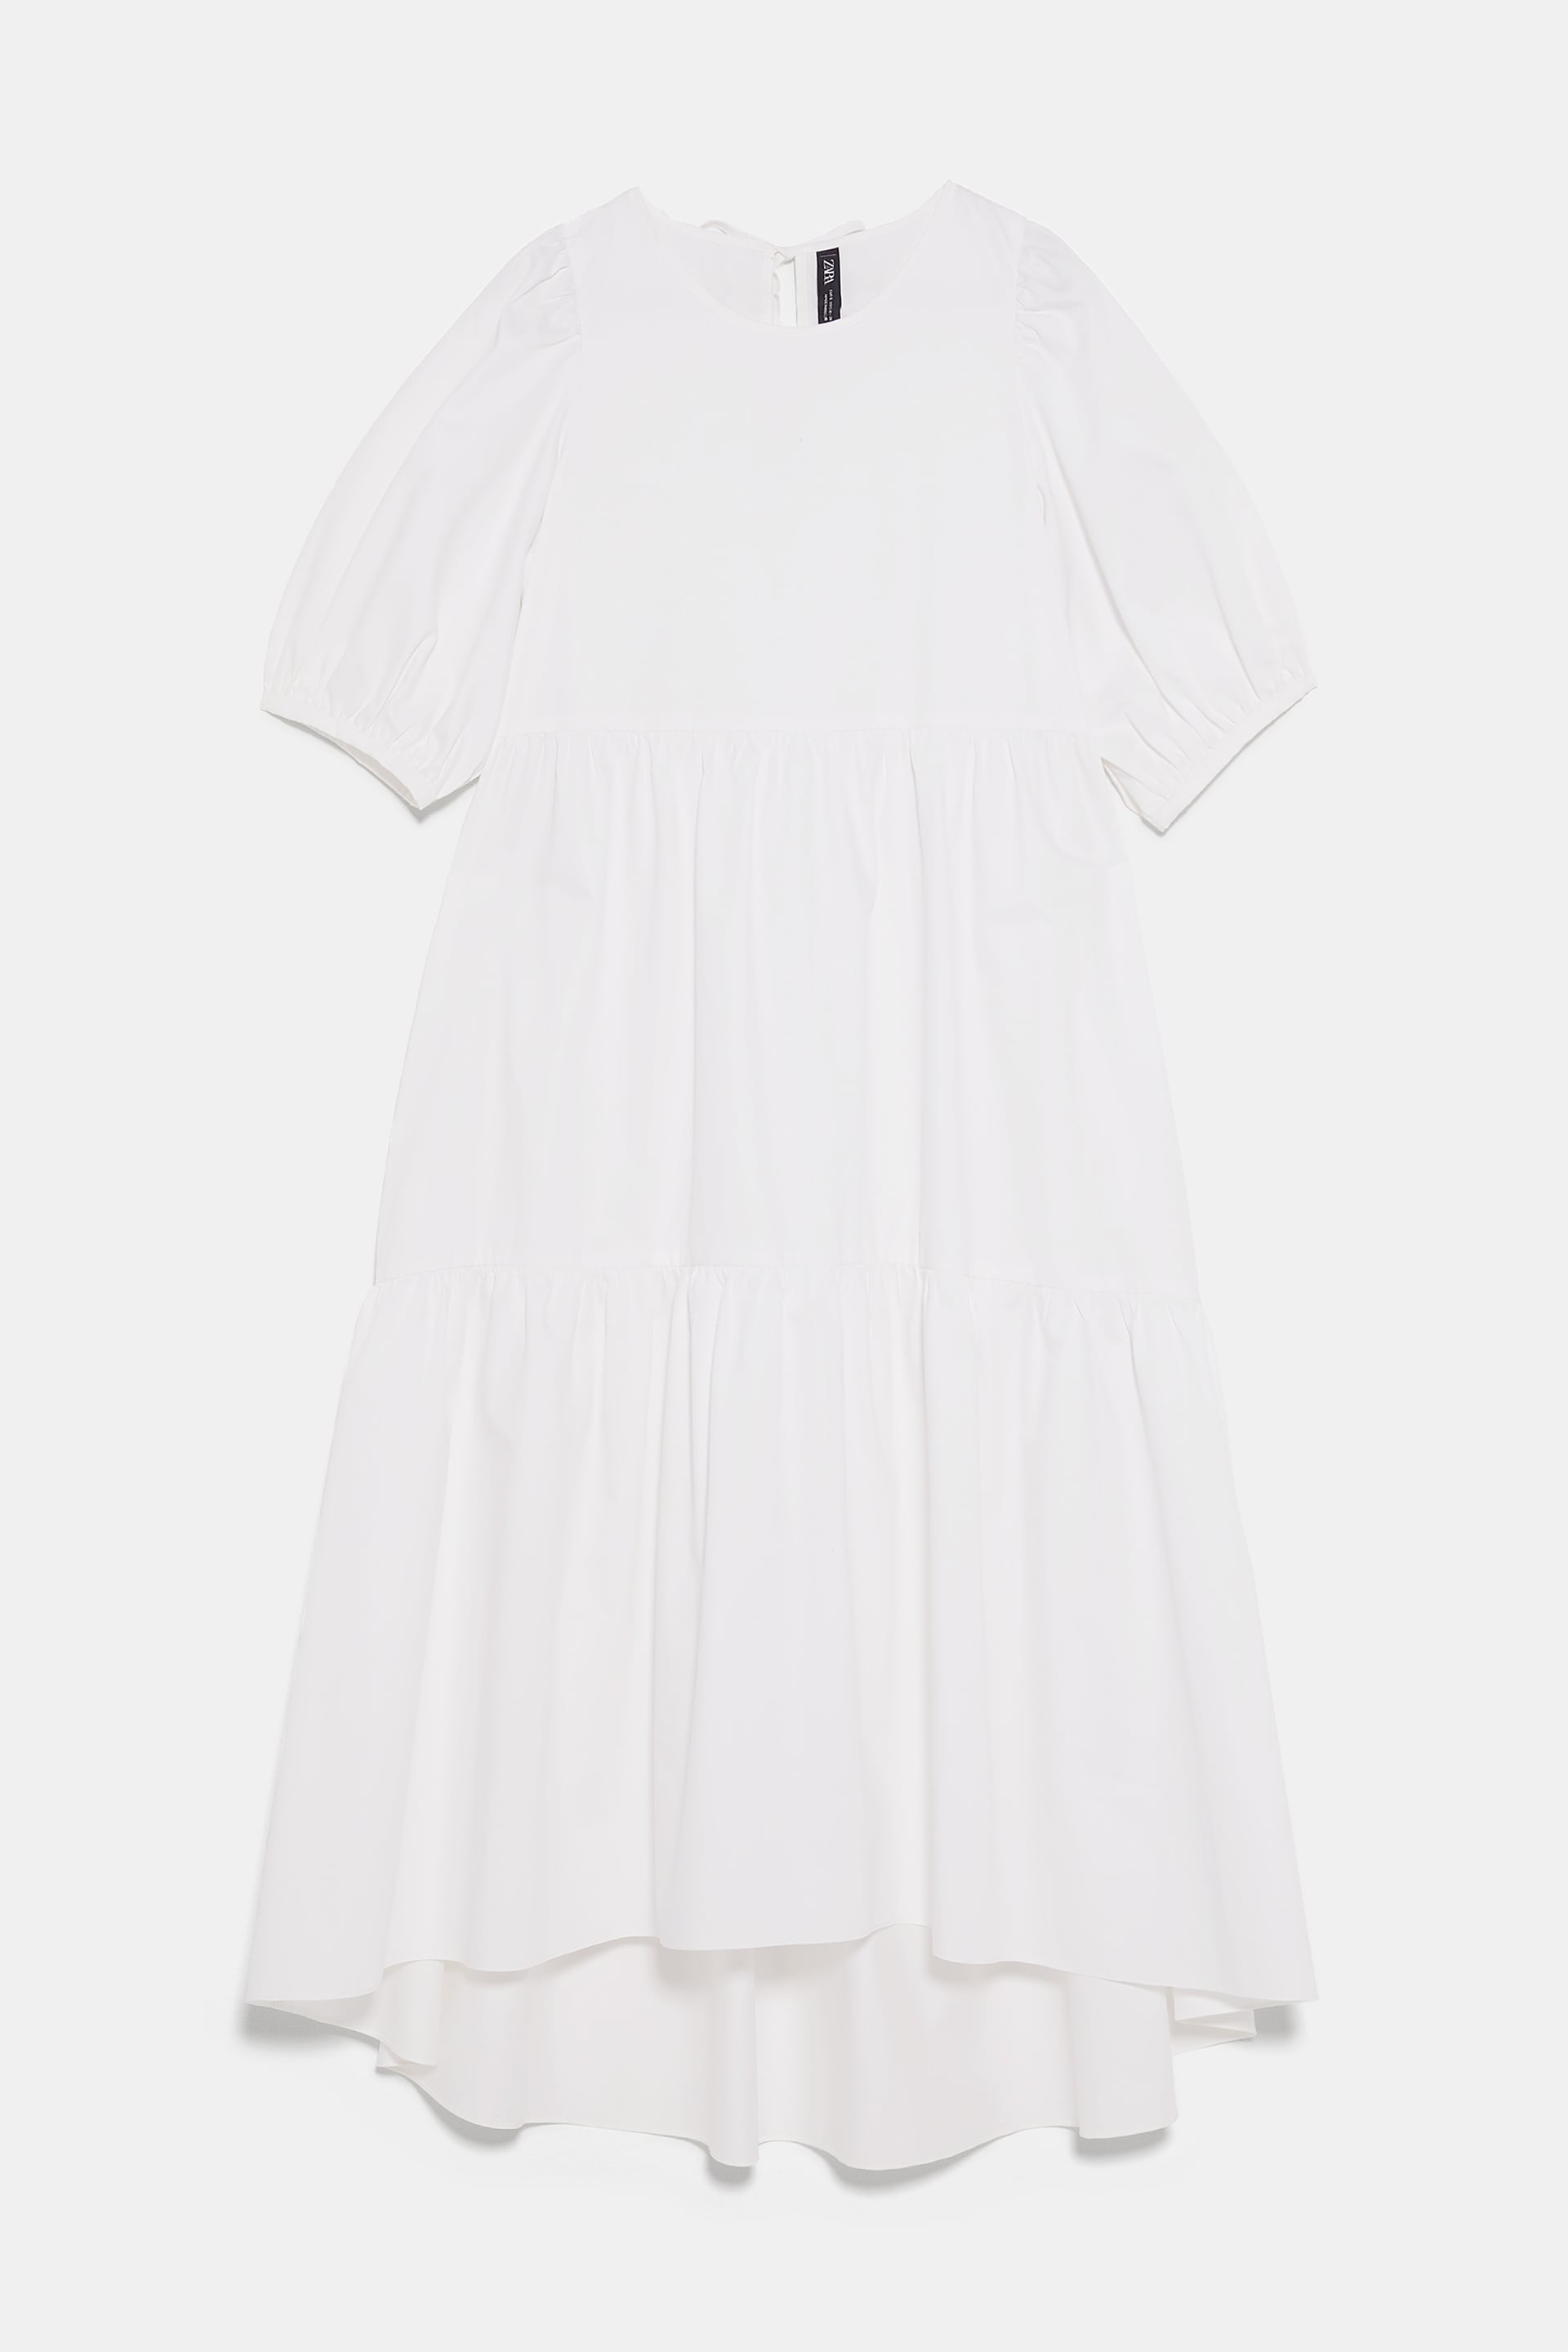 white tshirt contrast dress zara